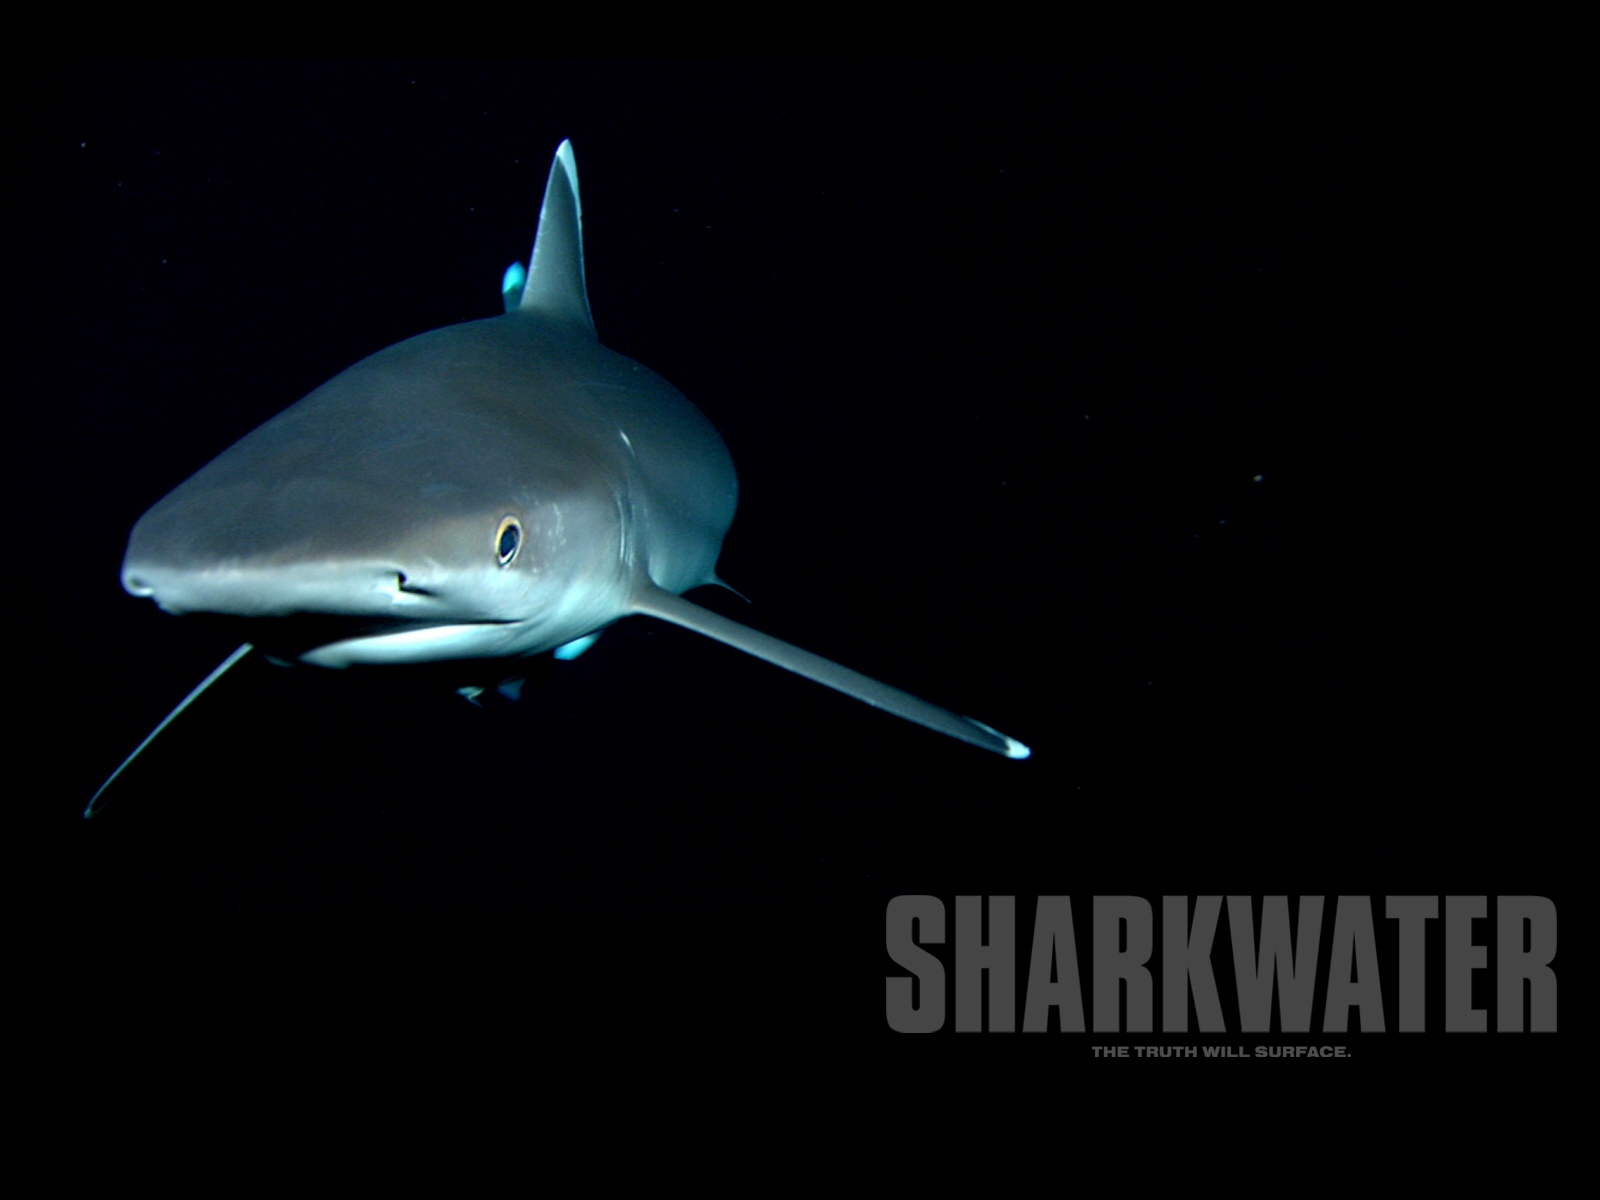 2017_02_06_Rob-Stewart_01 (c) Scene from the movie Sharkwater
(c) Rob Stewart / Sharkwater